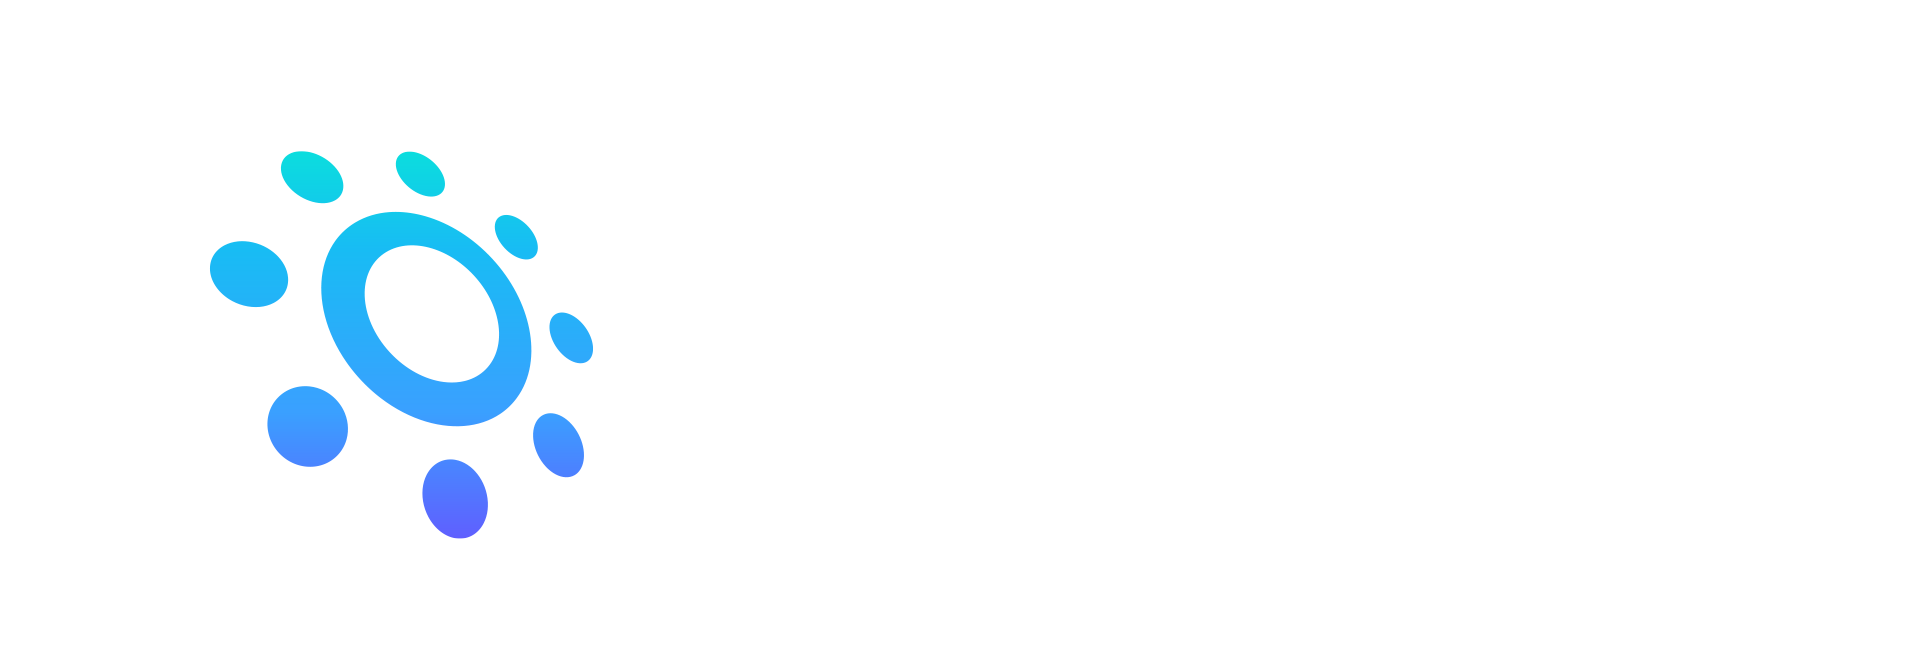 Fibrebroadband Logo